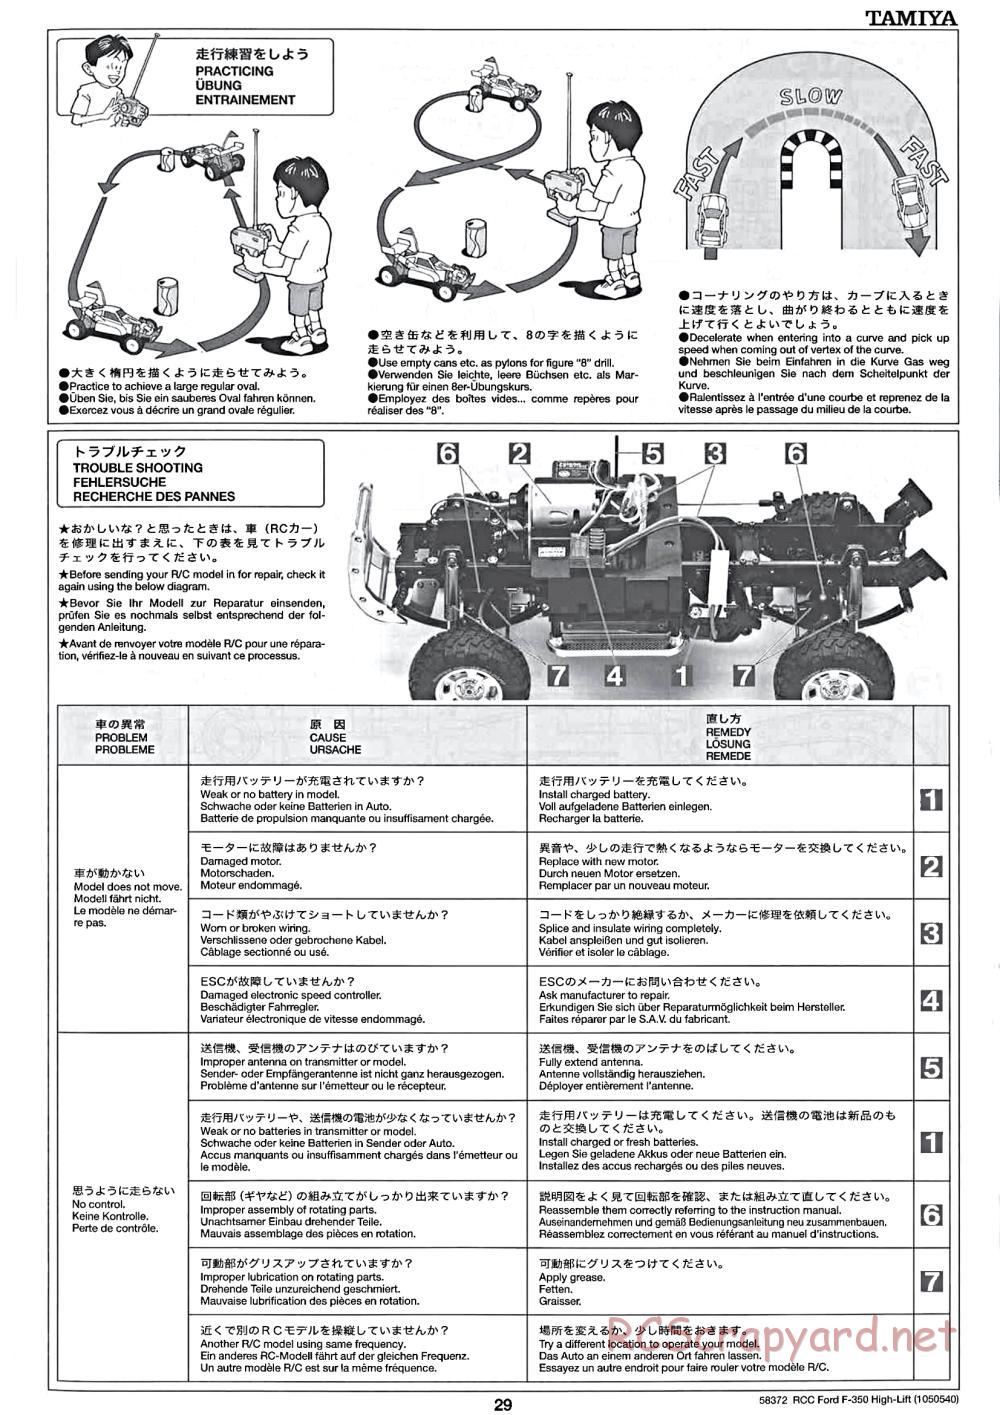 Tamiya - Ford F350 High-Lift Chassis - Manual - Page 29